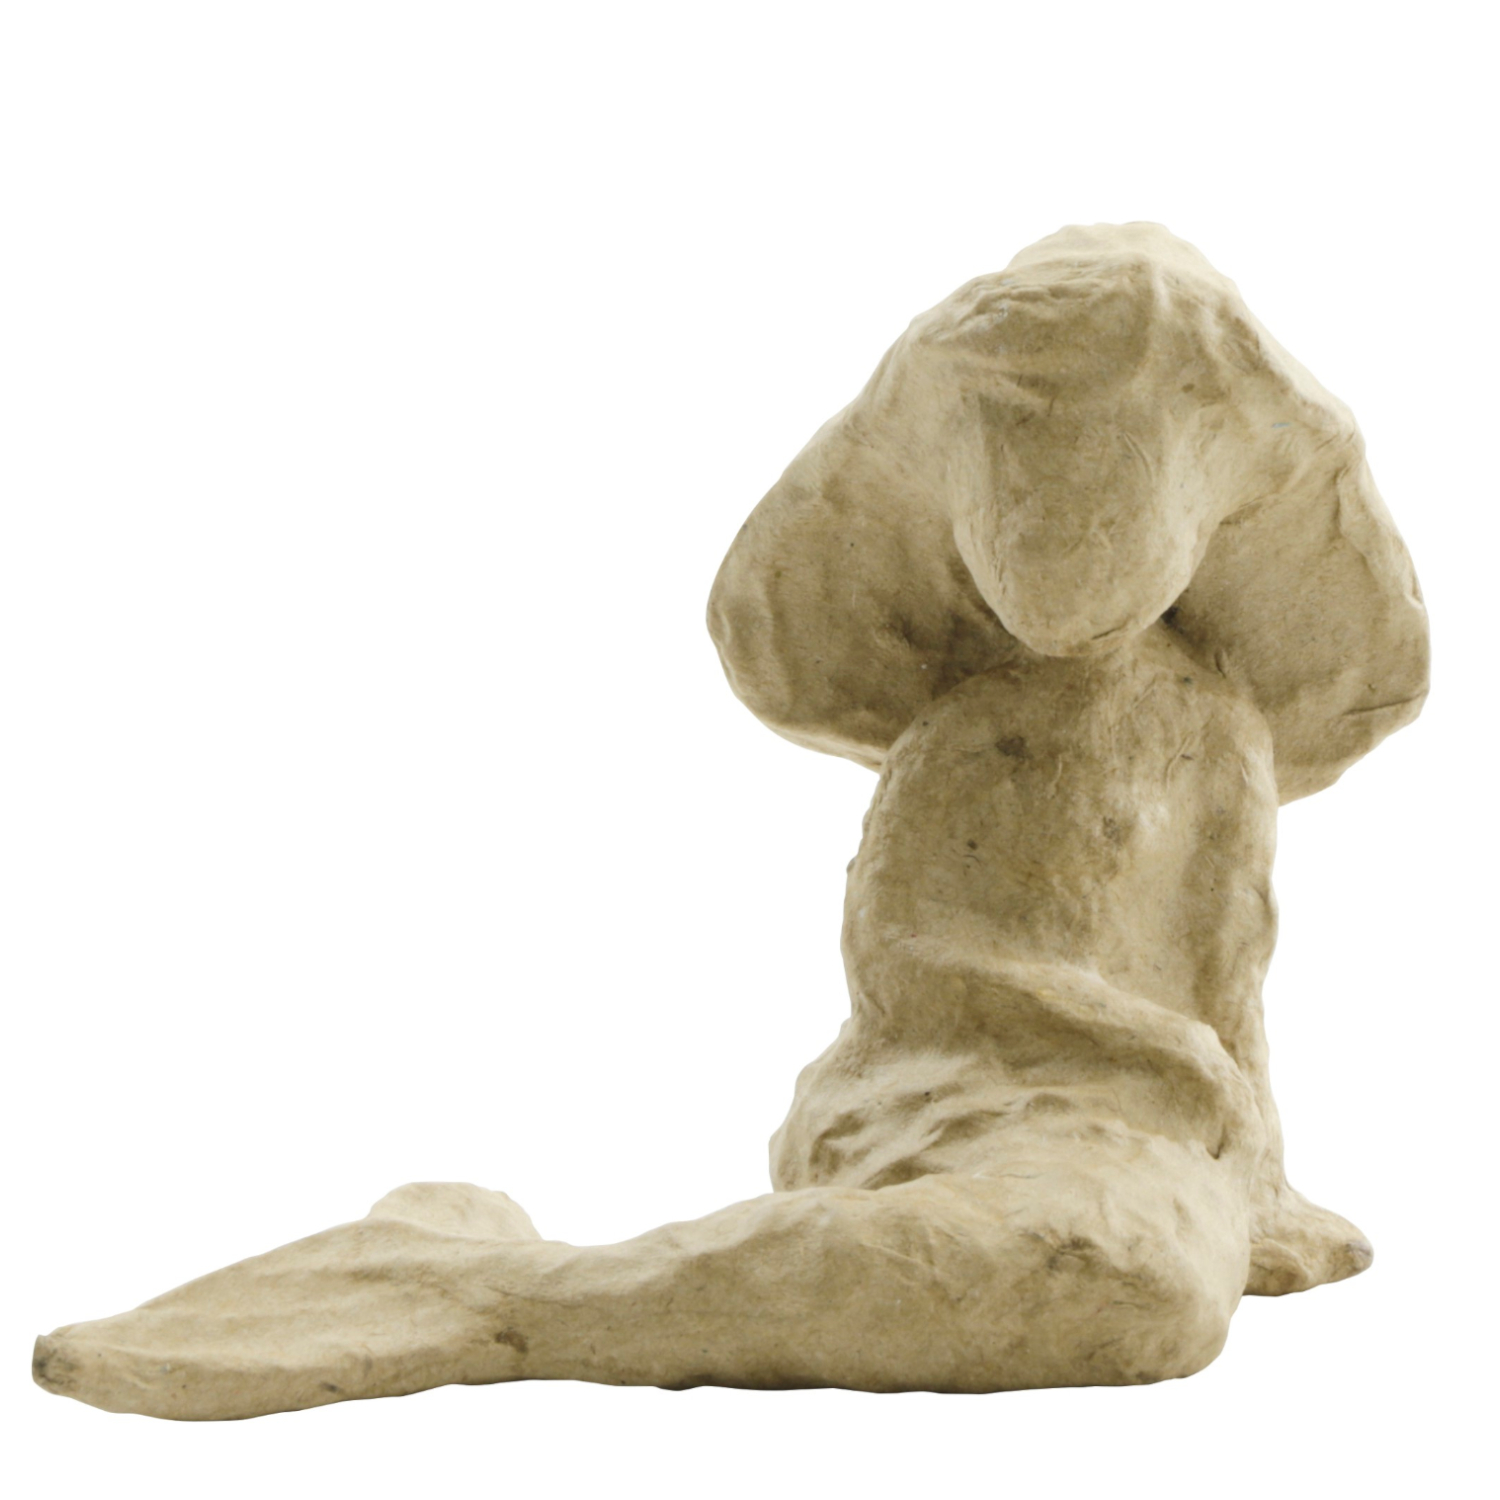 NEU Pappmaché-Figur, Meerjungfrau, 6 x 10,5 x 9,5 cm